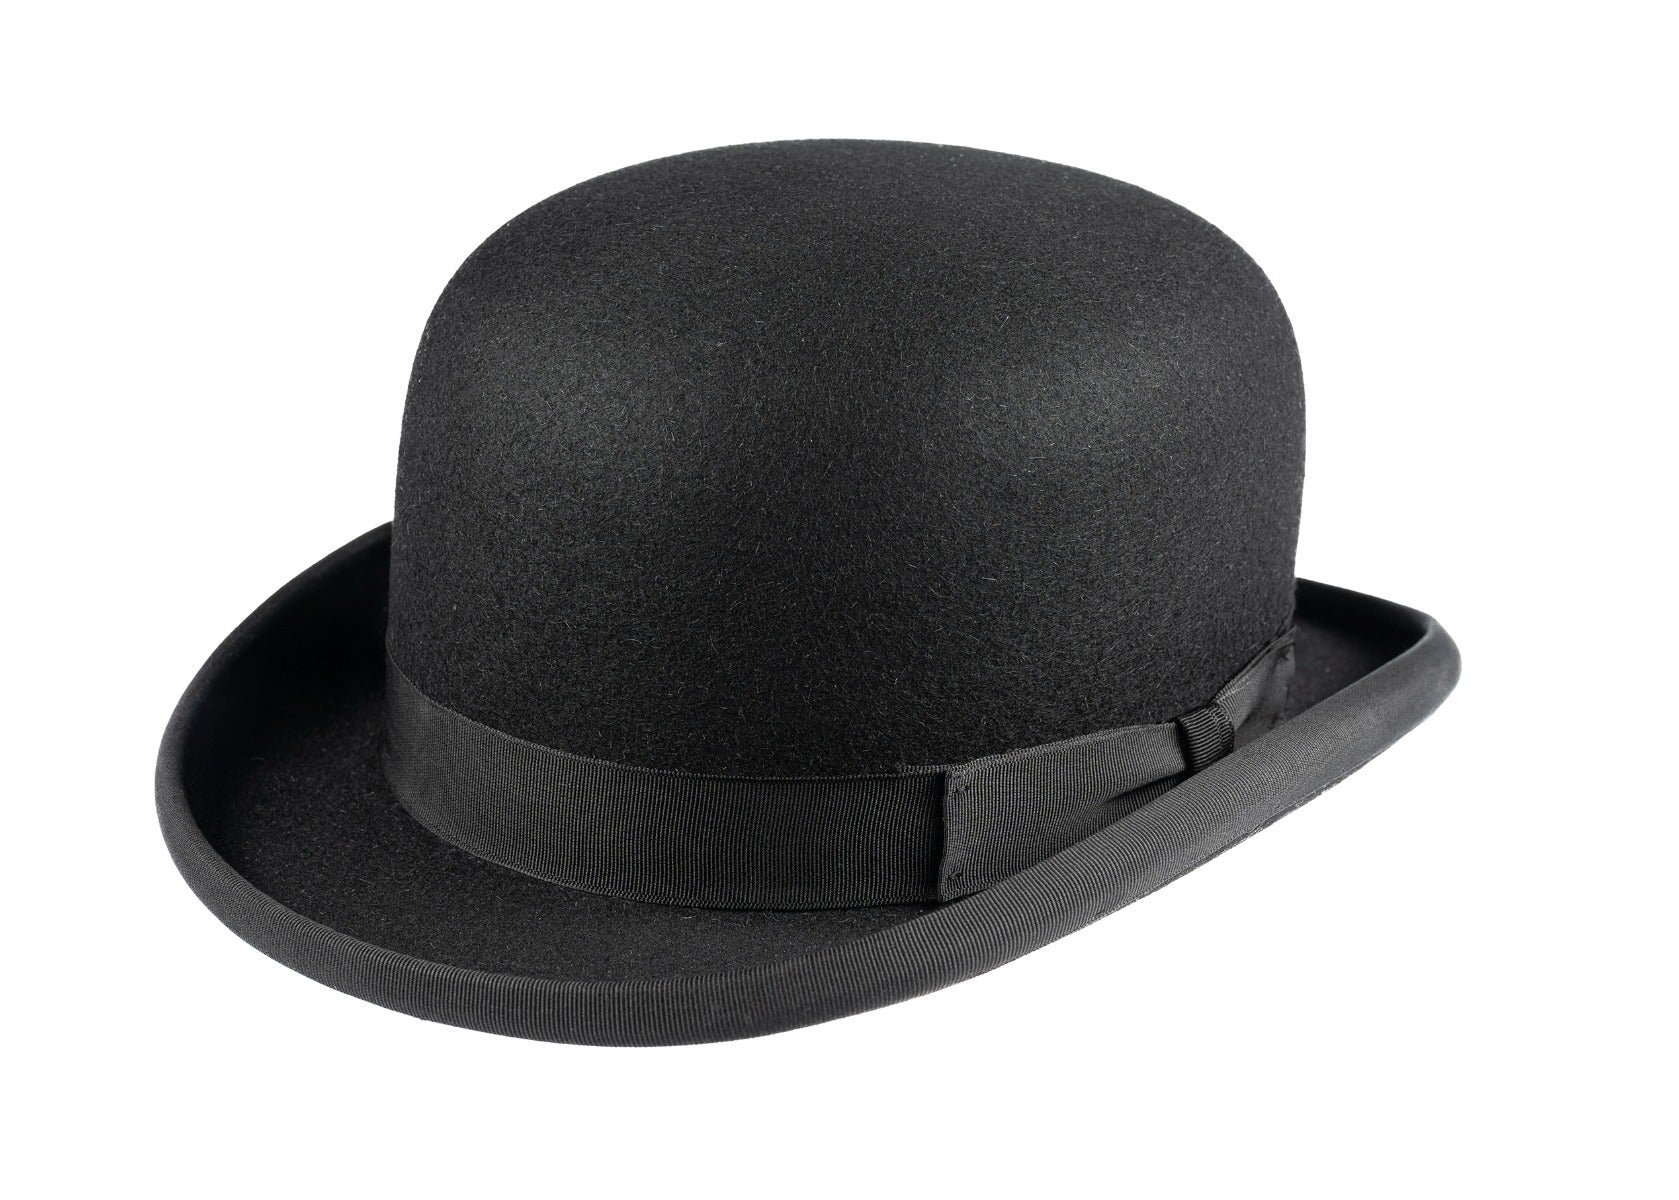 Devon Fur Felt Bowler Hat with Adjustable Hunting Pad